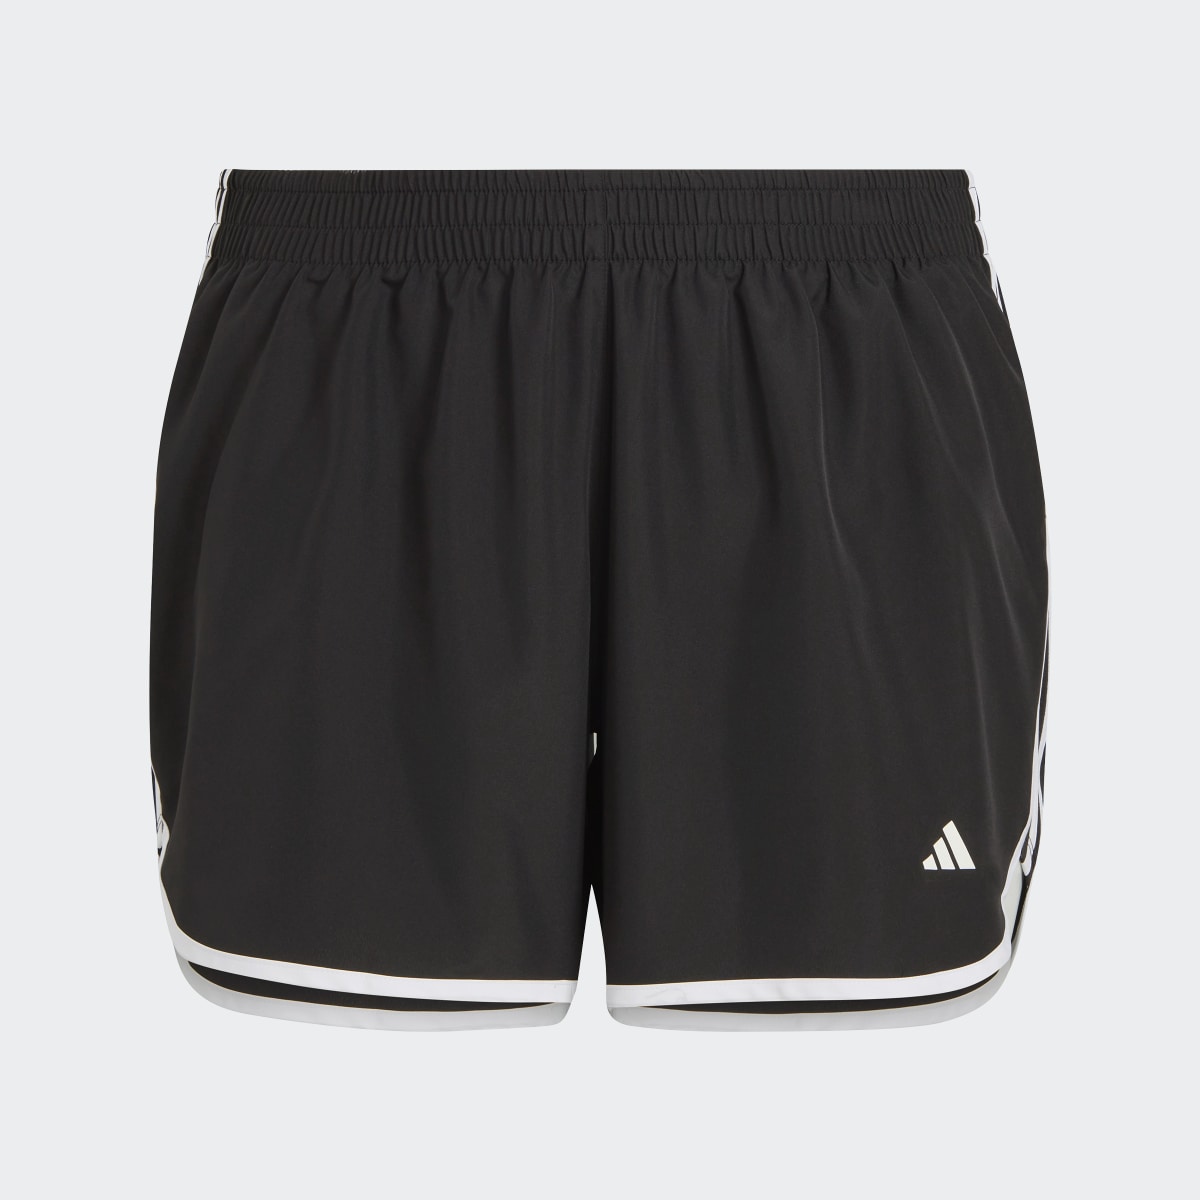 Adidas Marathon 20 Running Shorts (Plus Size). 4